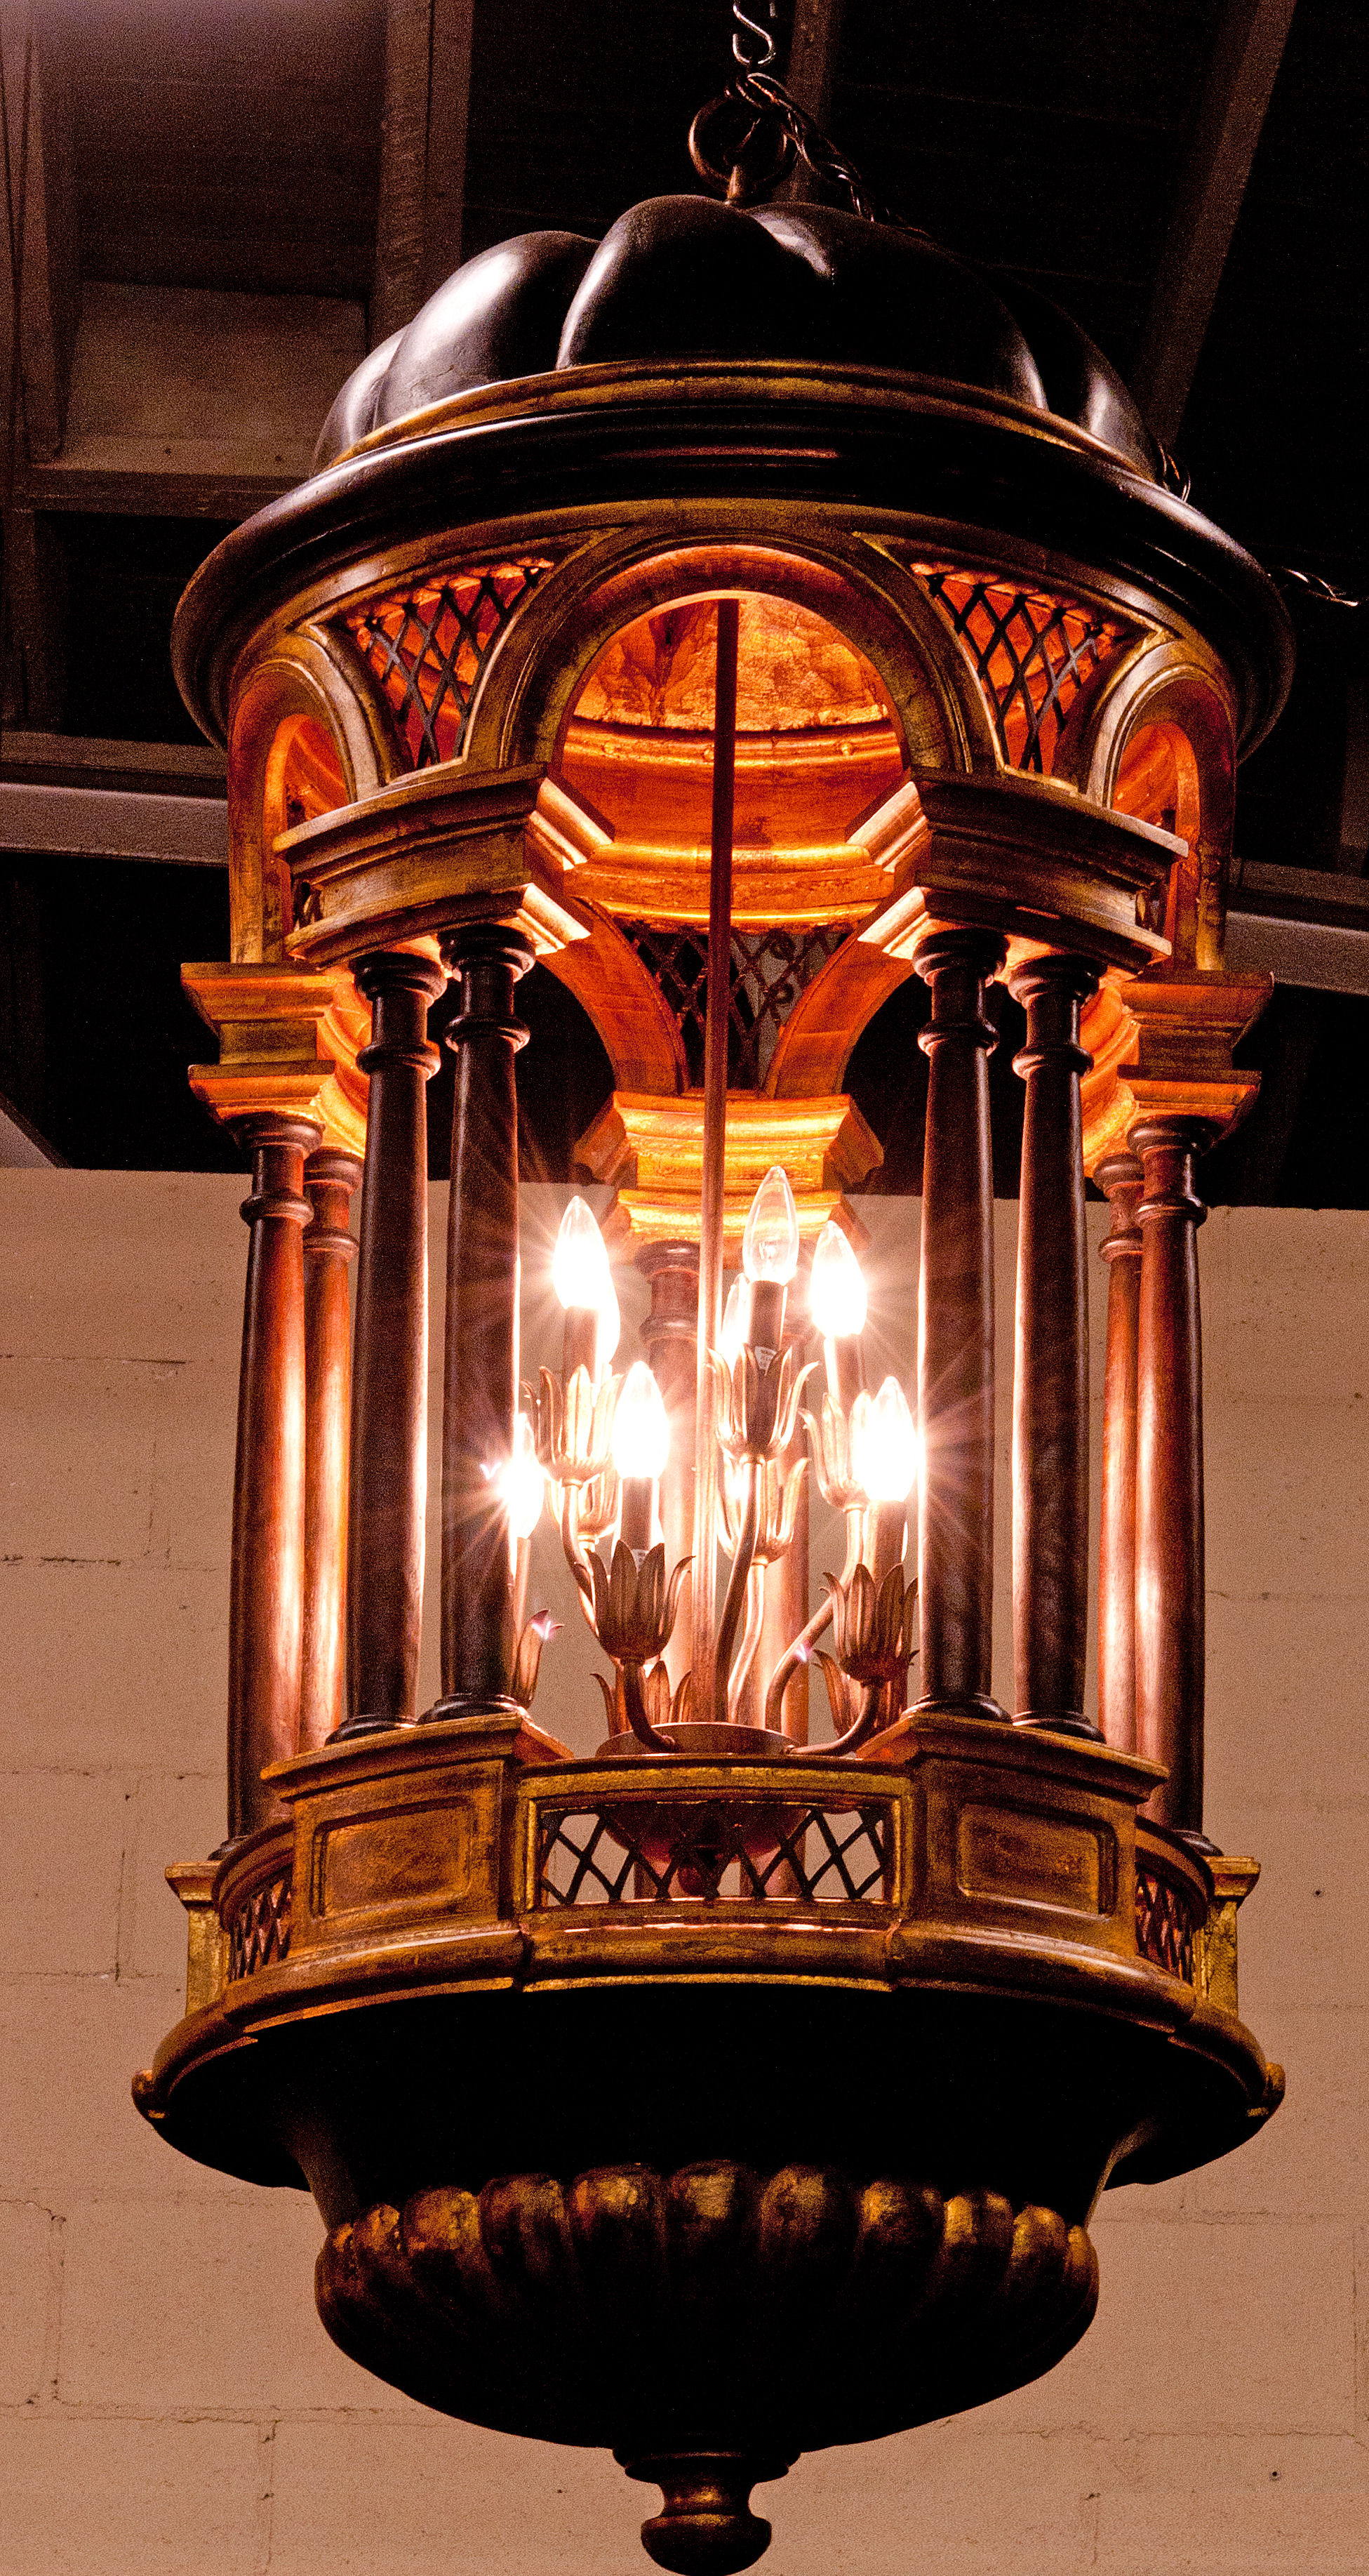 antique lantern